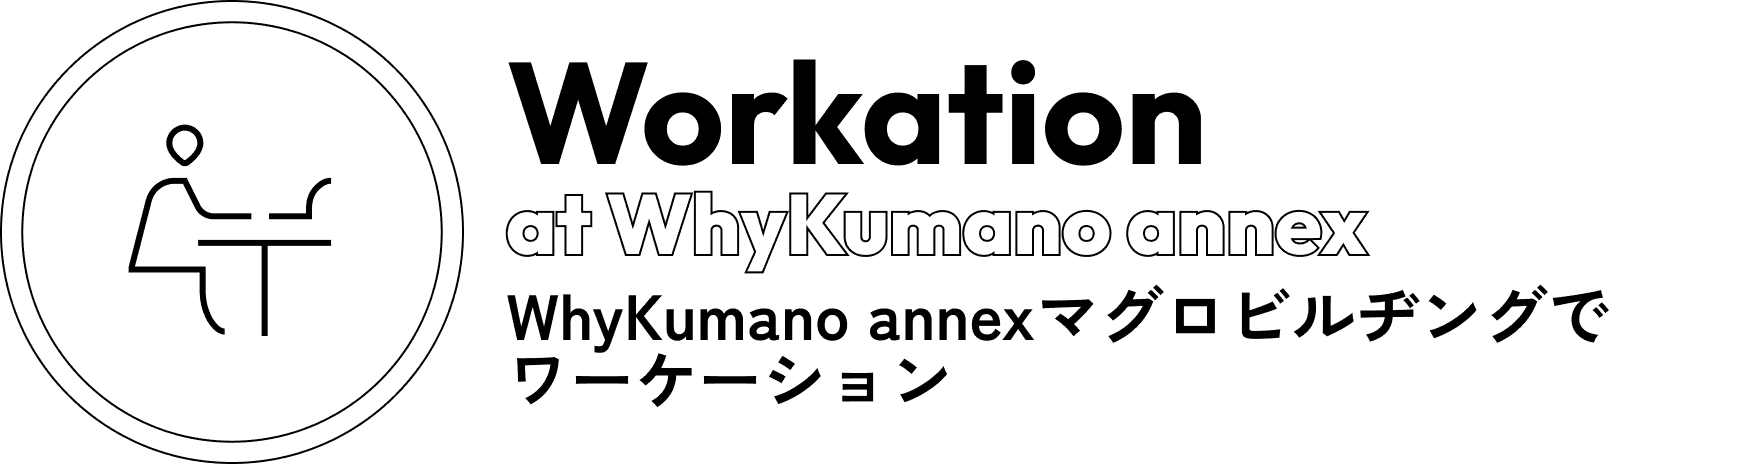 WhyKumano-annexマグロビルヂングでワーケーション